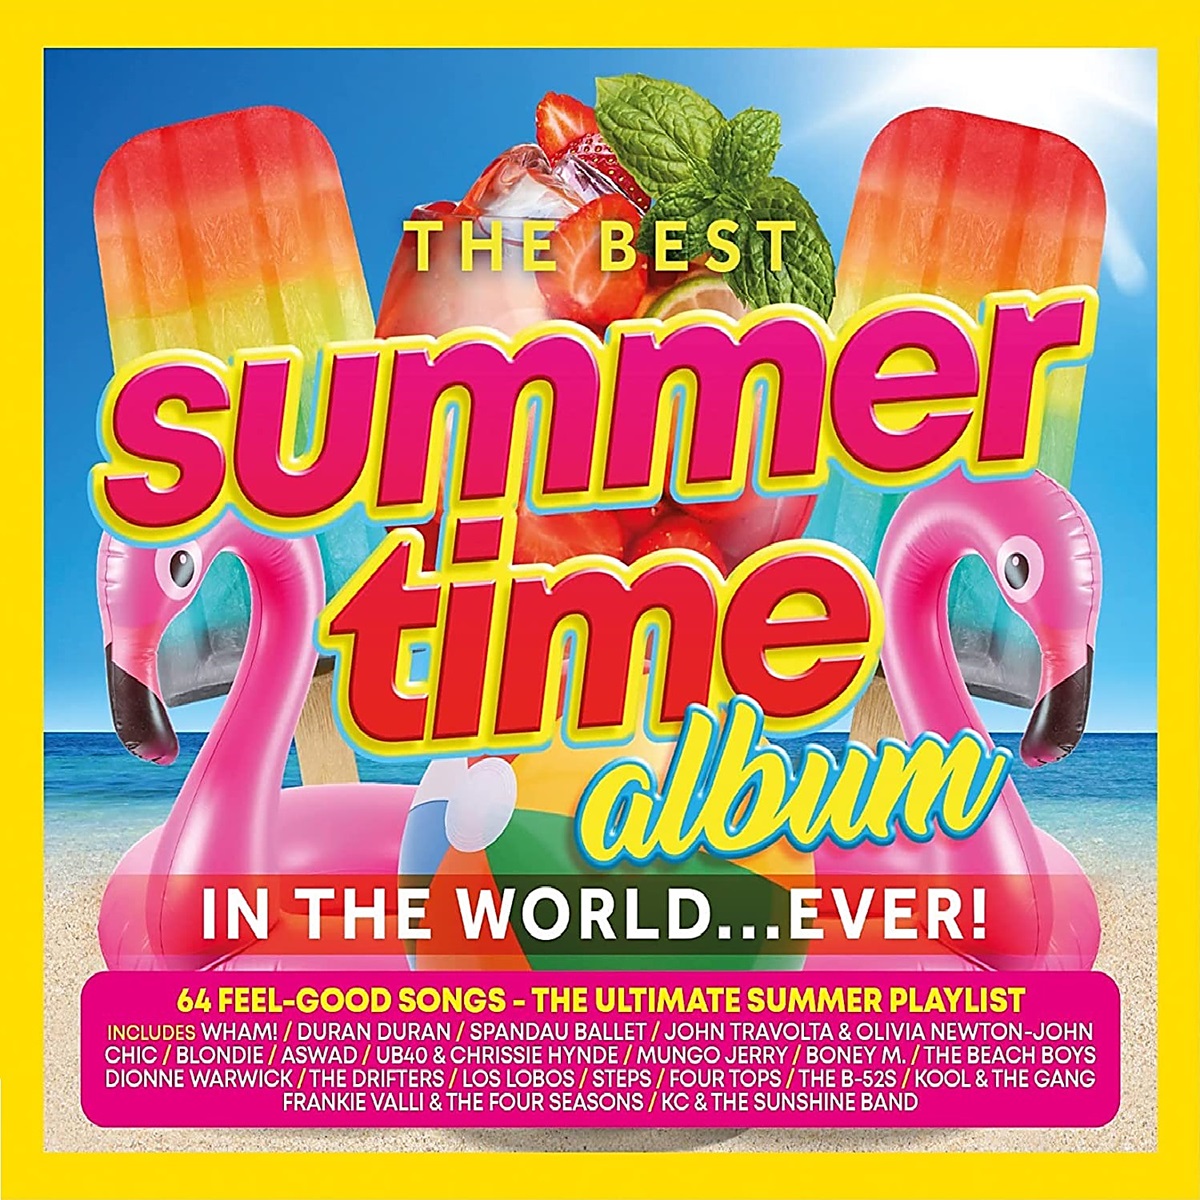 The Best Summertime Album In The World... Ever!